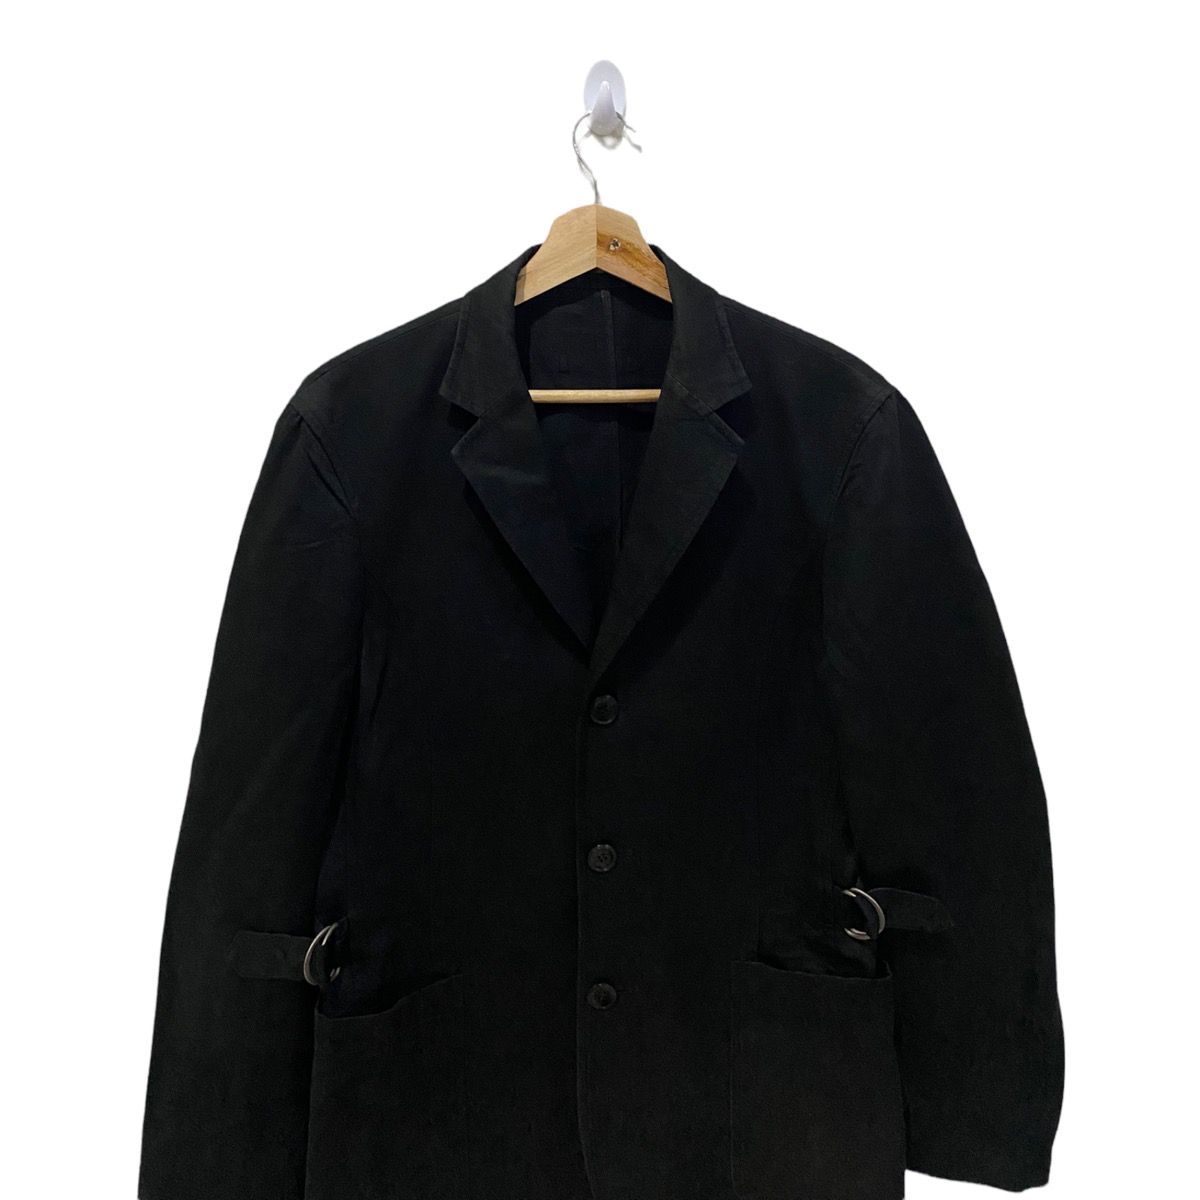 Archival Clothing - GRAIL🔥GAULTIER HOMME OBJET BONDAGE COAT - 4